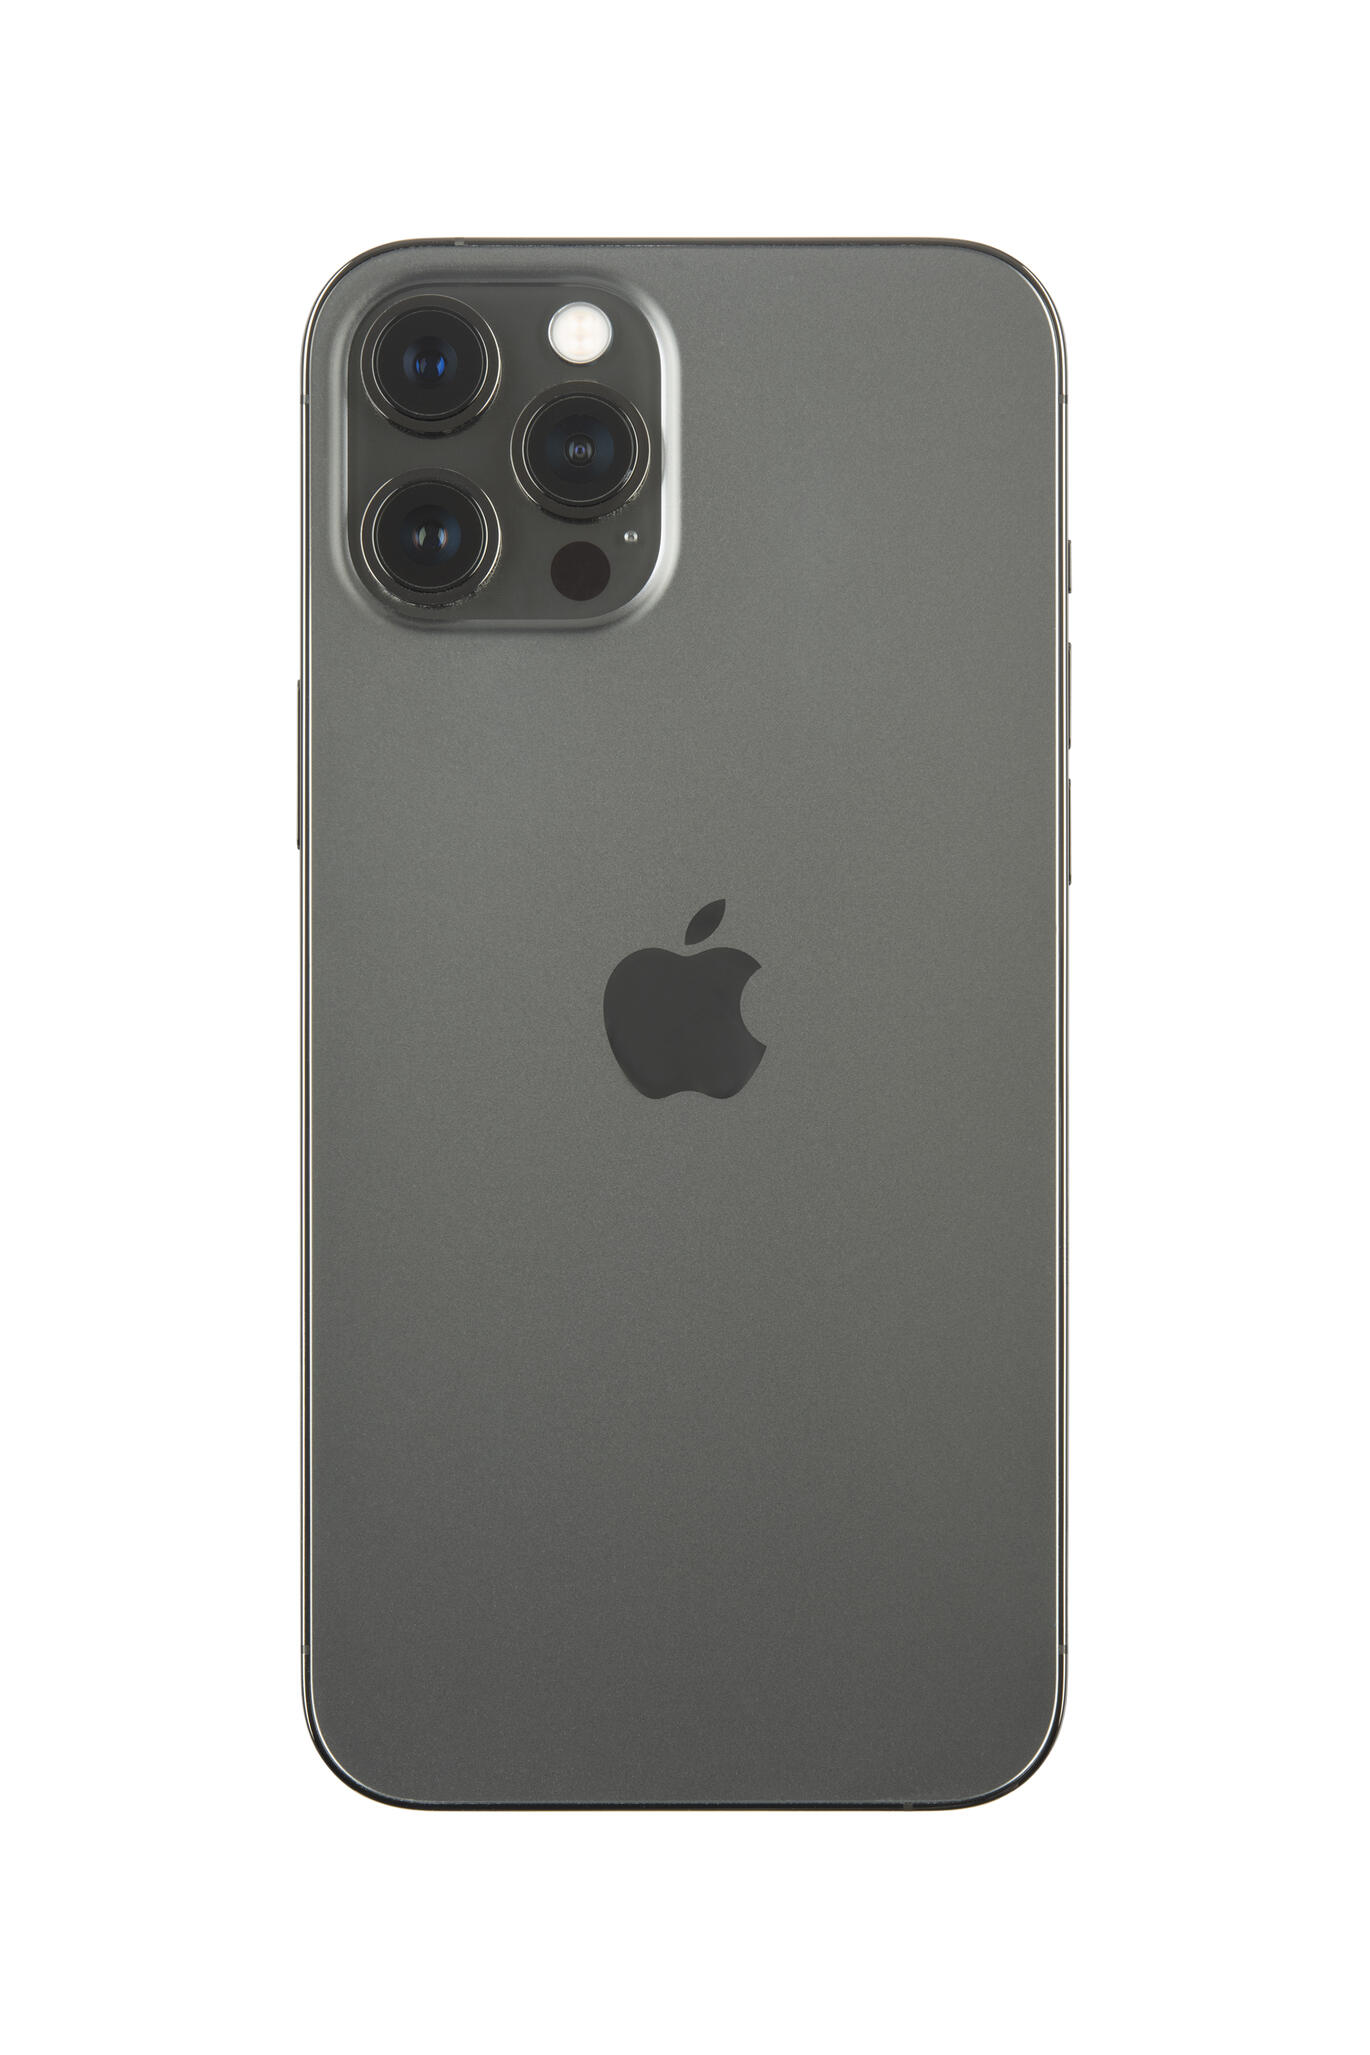 iPhone 12 Pro Max (128GB) Apple